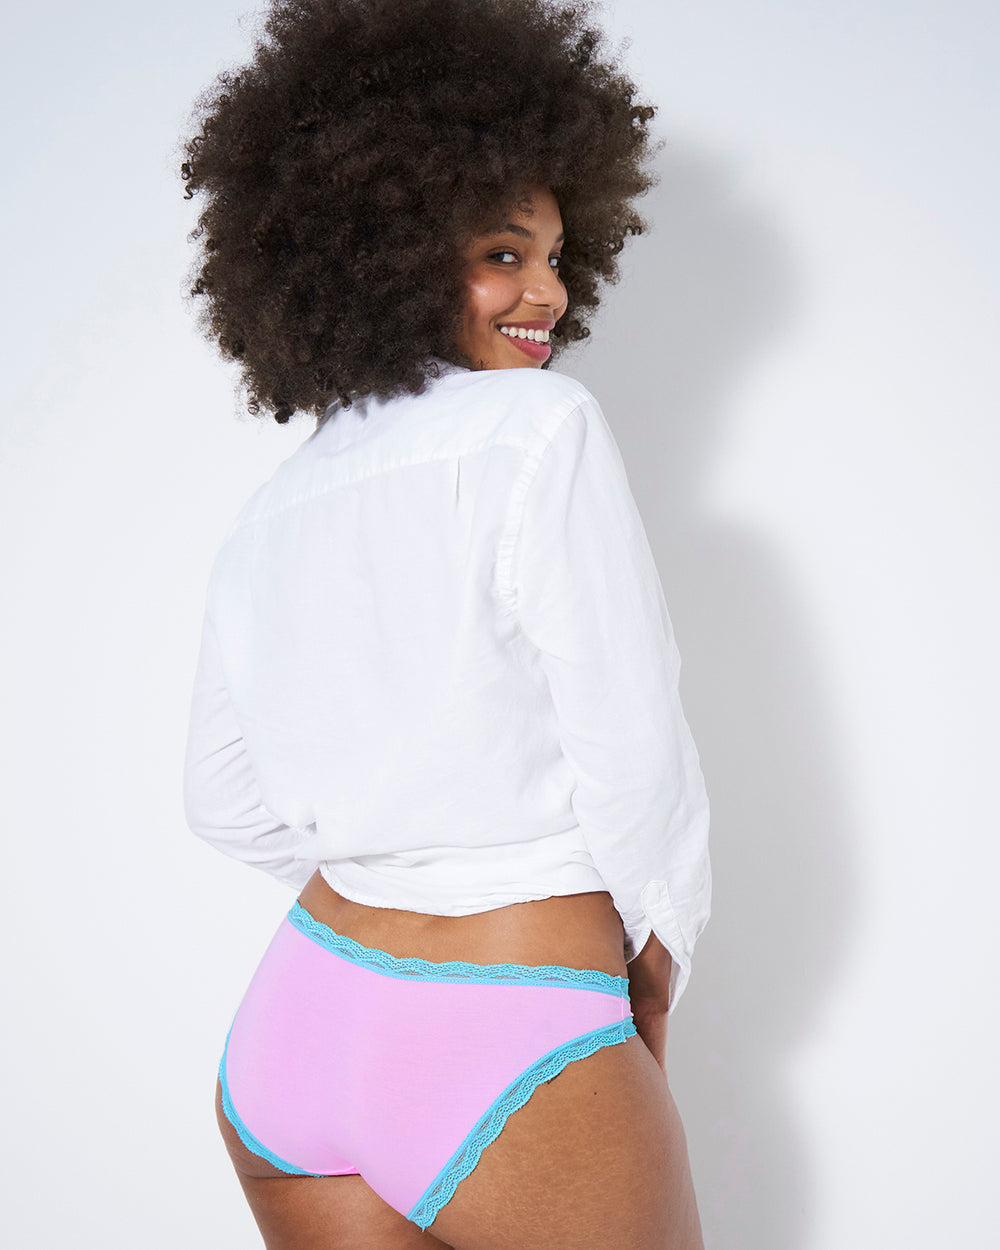 Candy Underwear for Women Women's High Waisted Cotton Underwear Soft  Breathable Panties Stretch Briefs